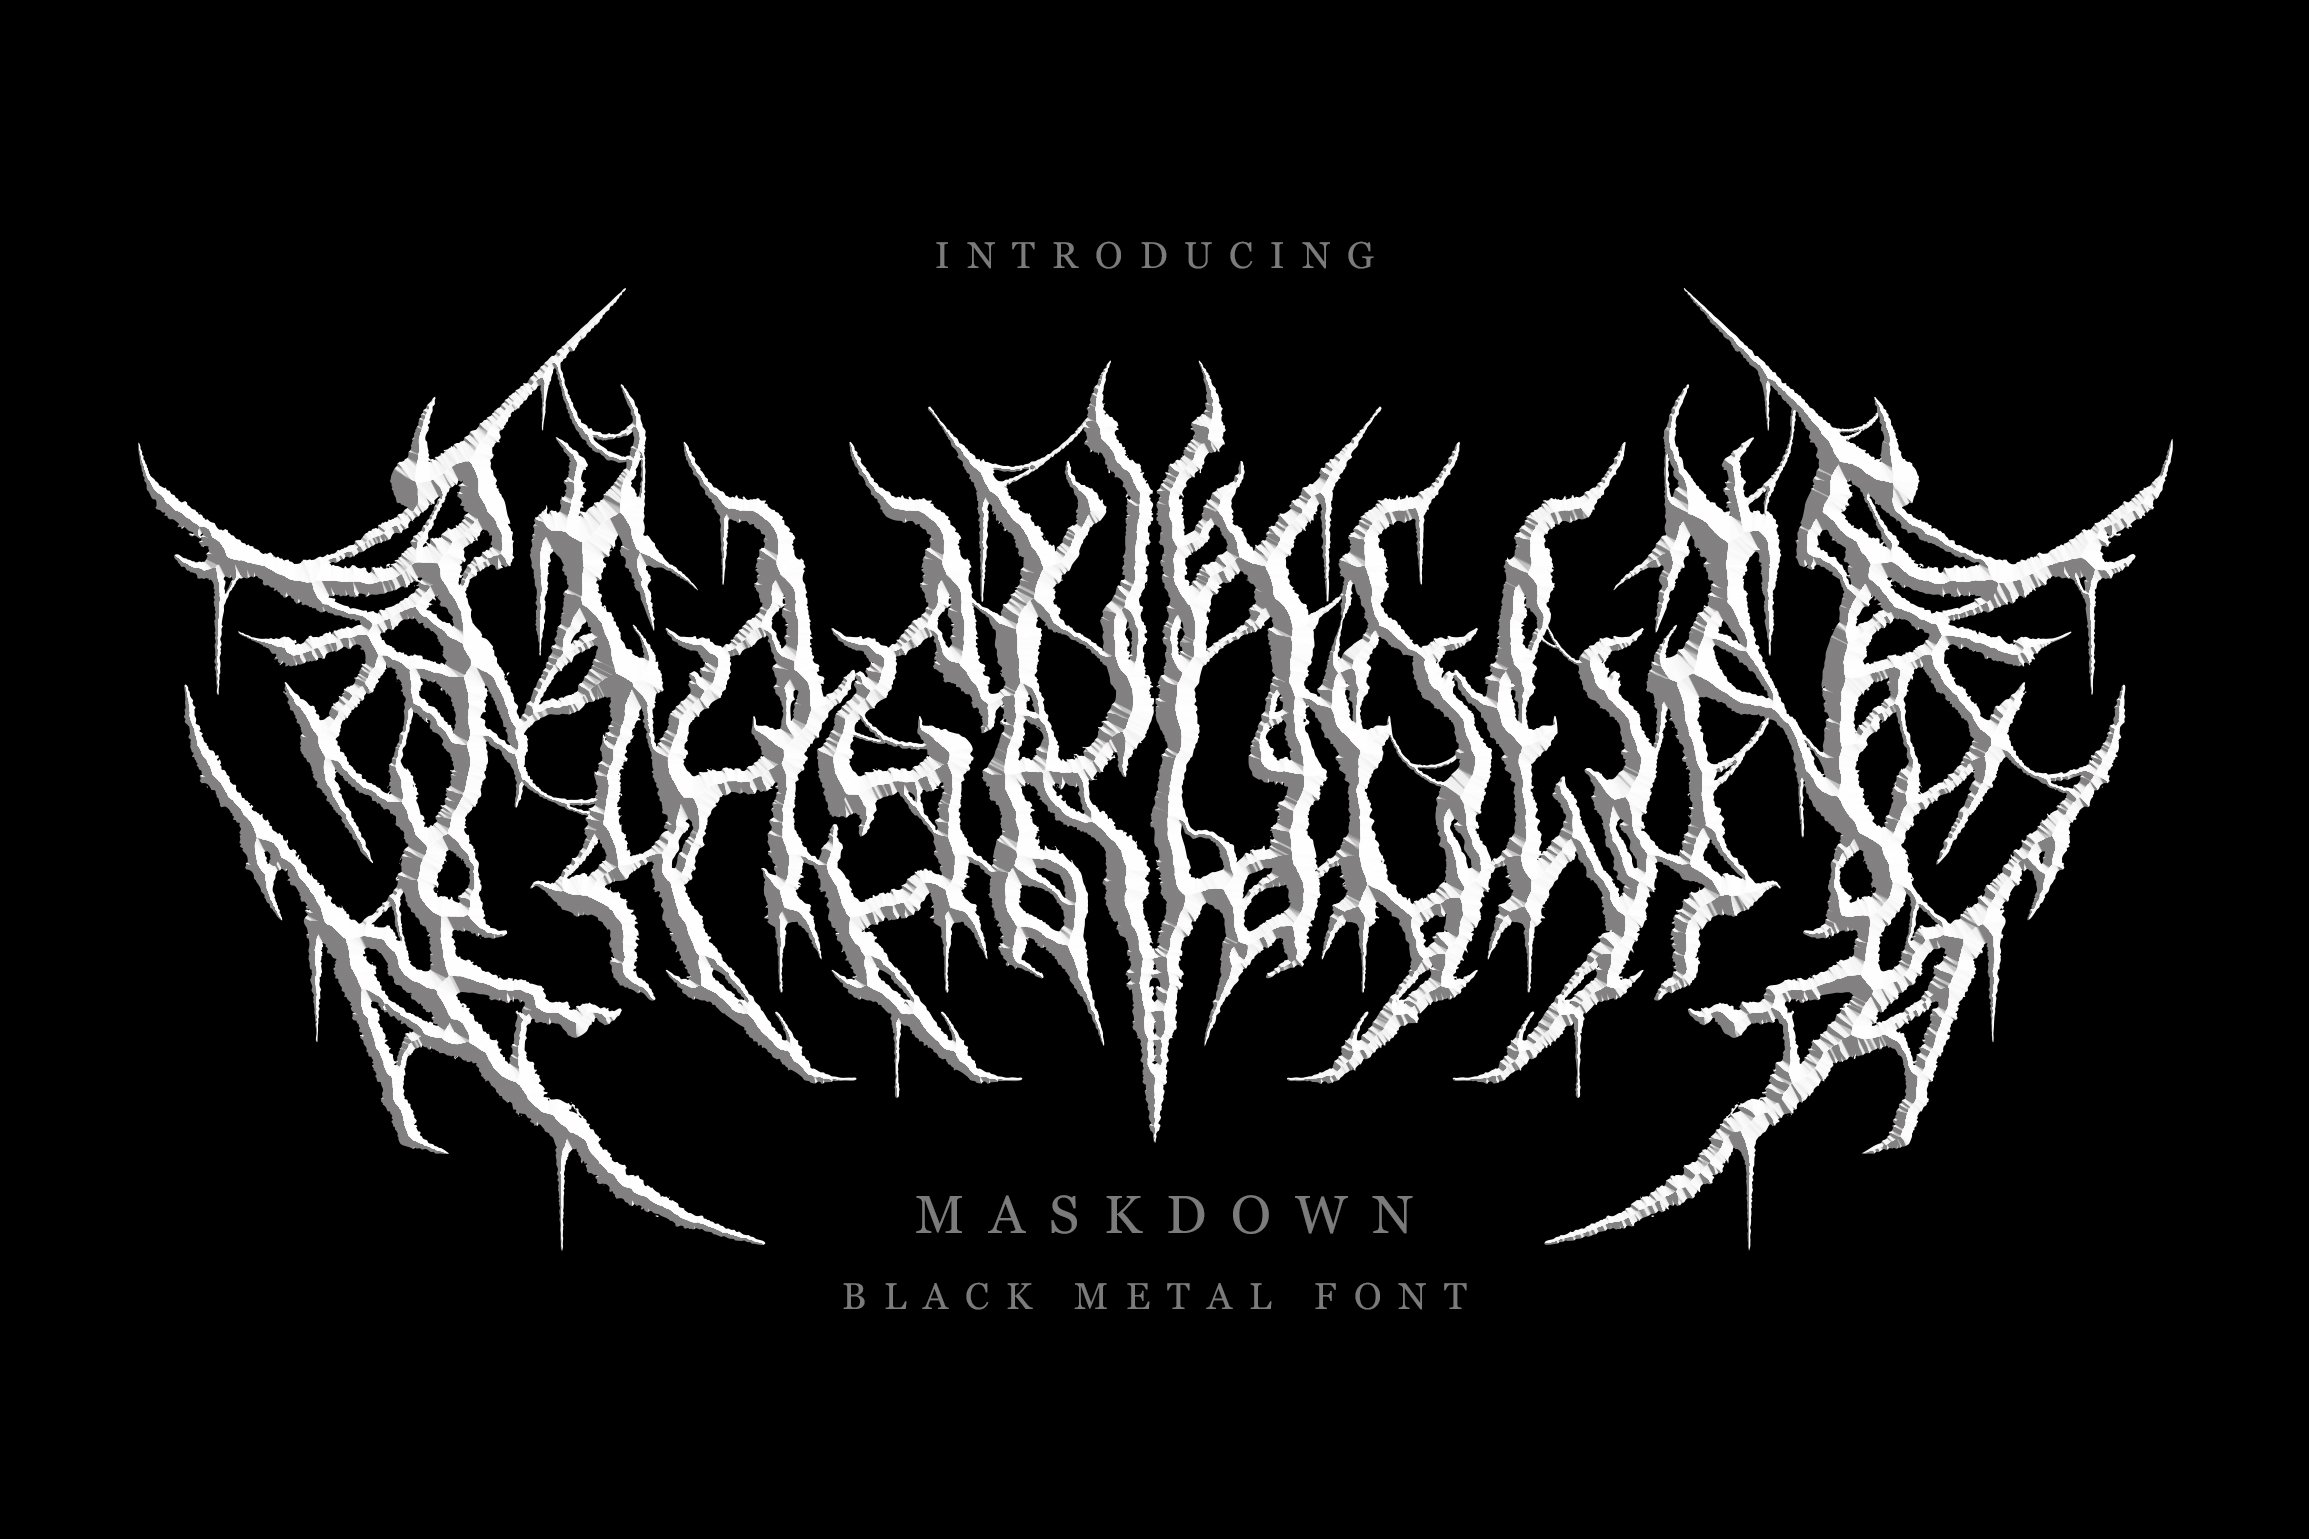 Maskdown | Black Metal Font Vol. 1 cover image.